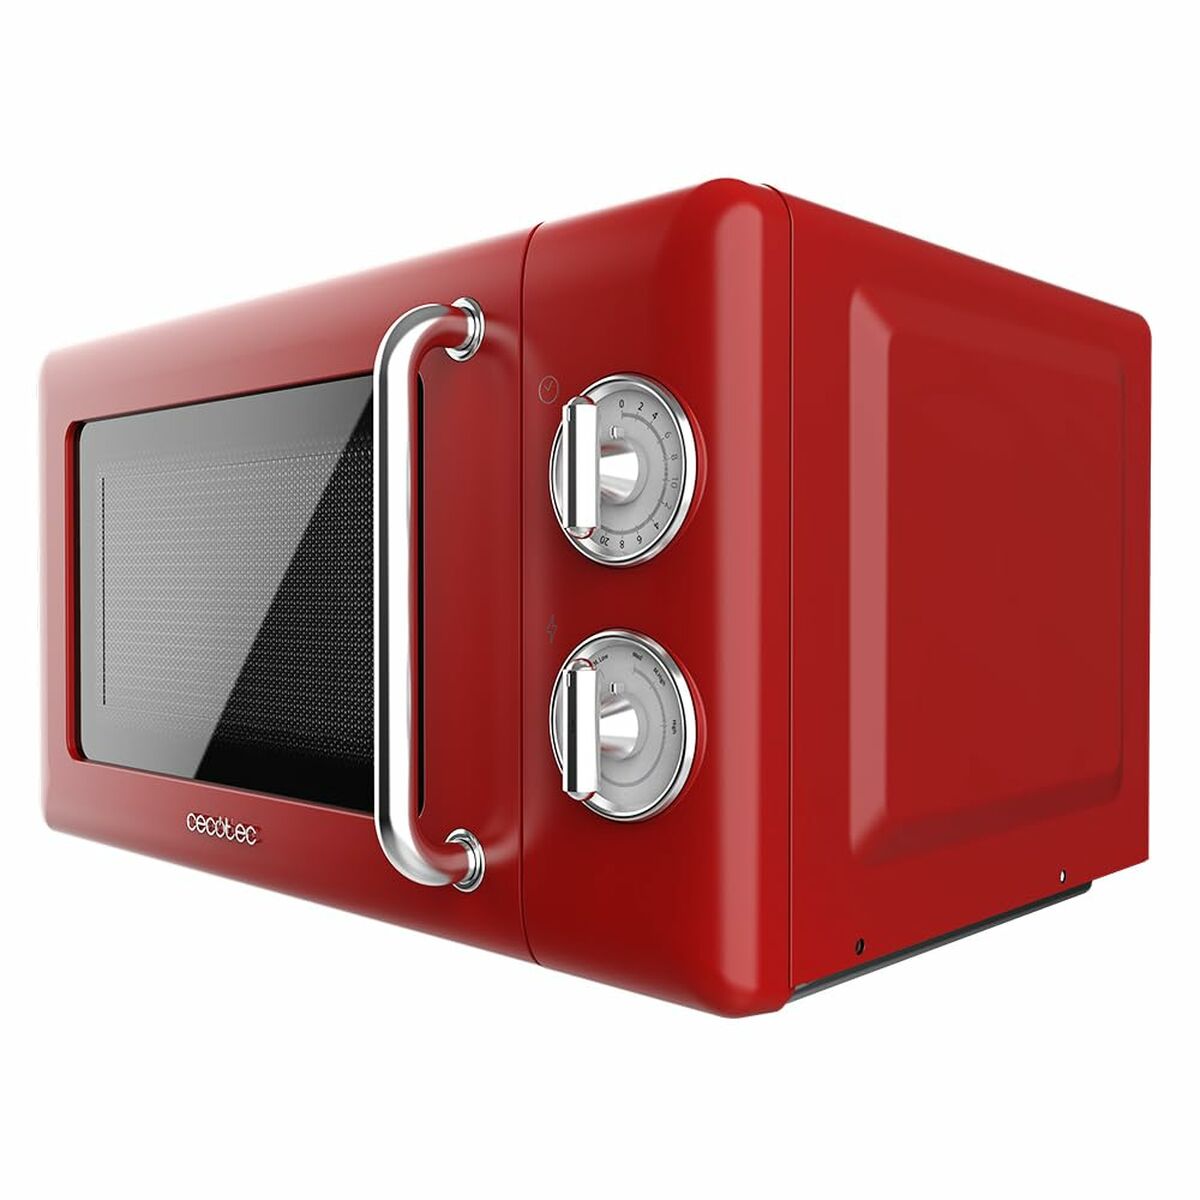 Microwave Cecotec Proclean 3010 Retro Red 20 L